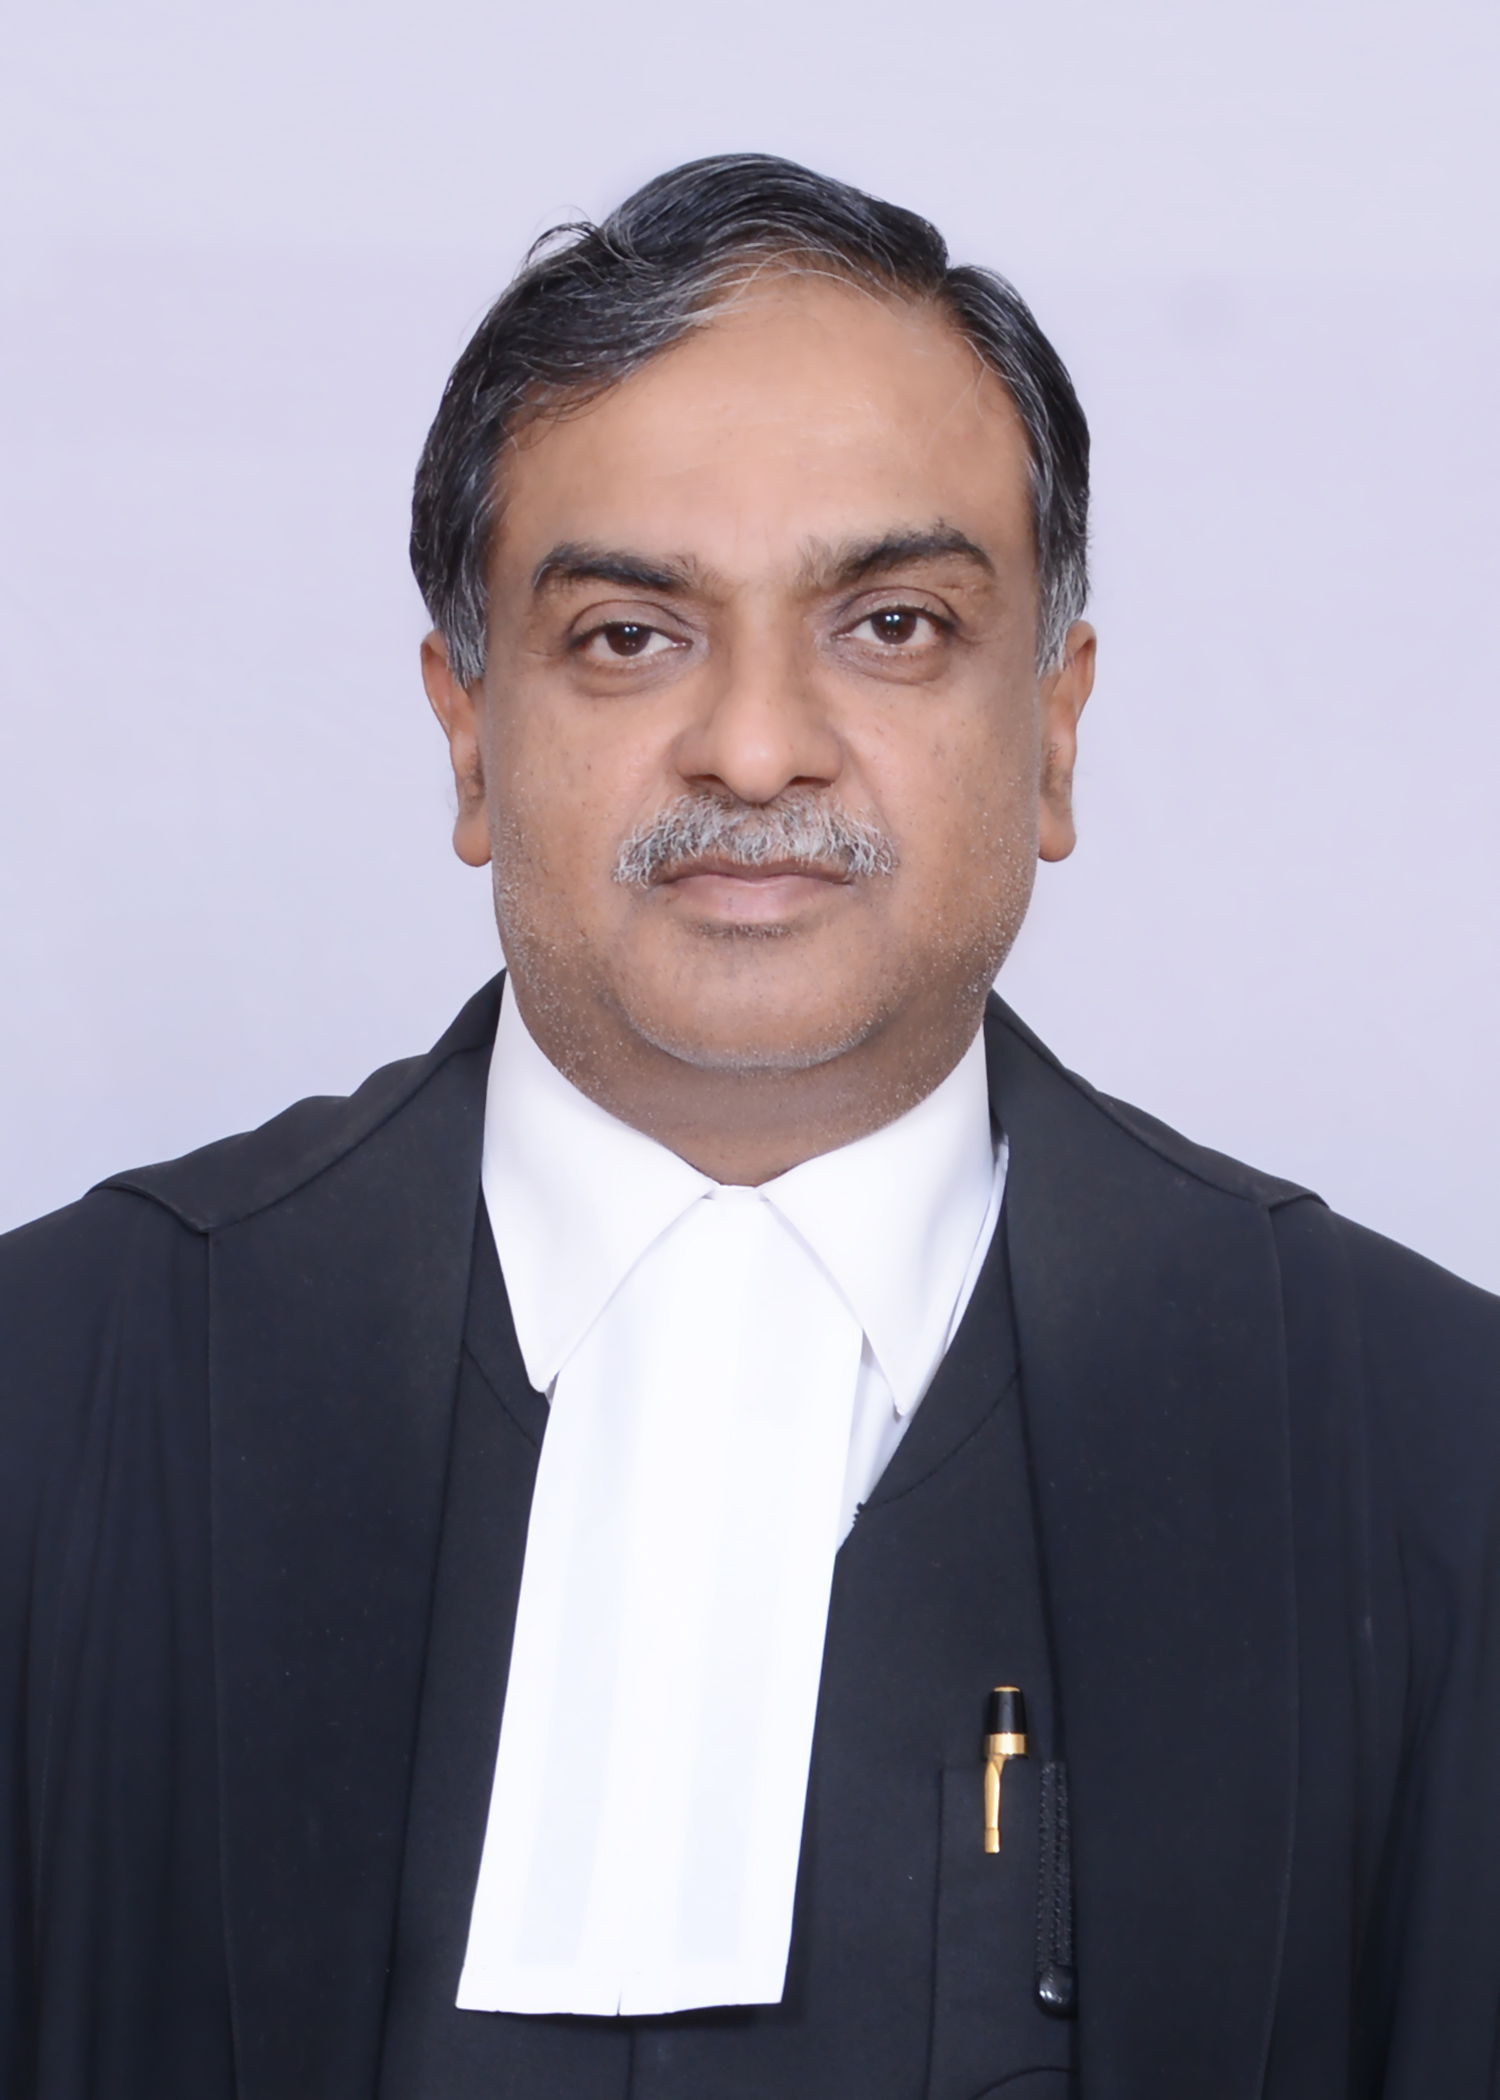 Hon’ble Mr. Justice Vikram Nath (Sr. Judge, Alld.)